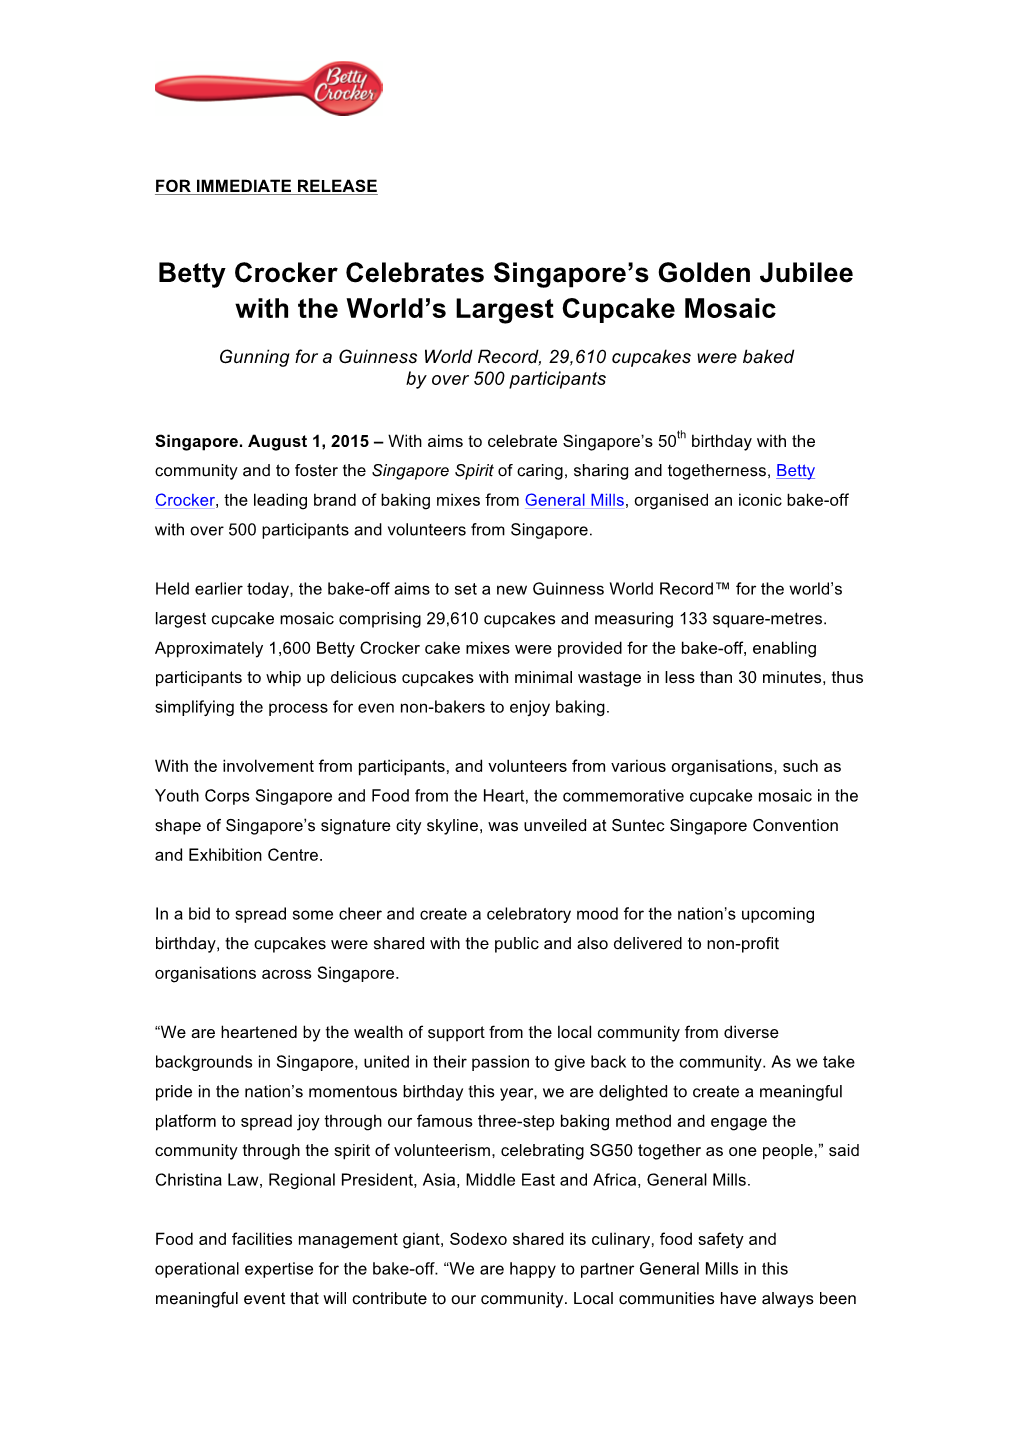 Betty Crocker Celebrates Singapore's Golden Jubilee with the World's